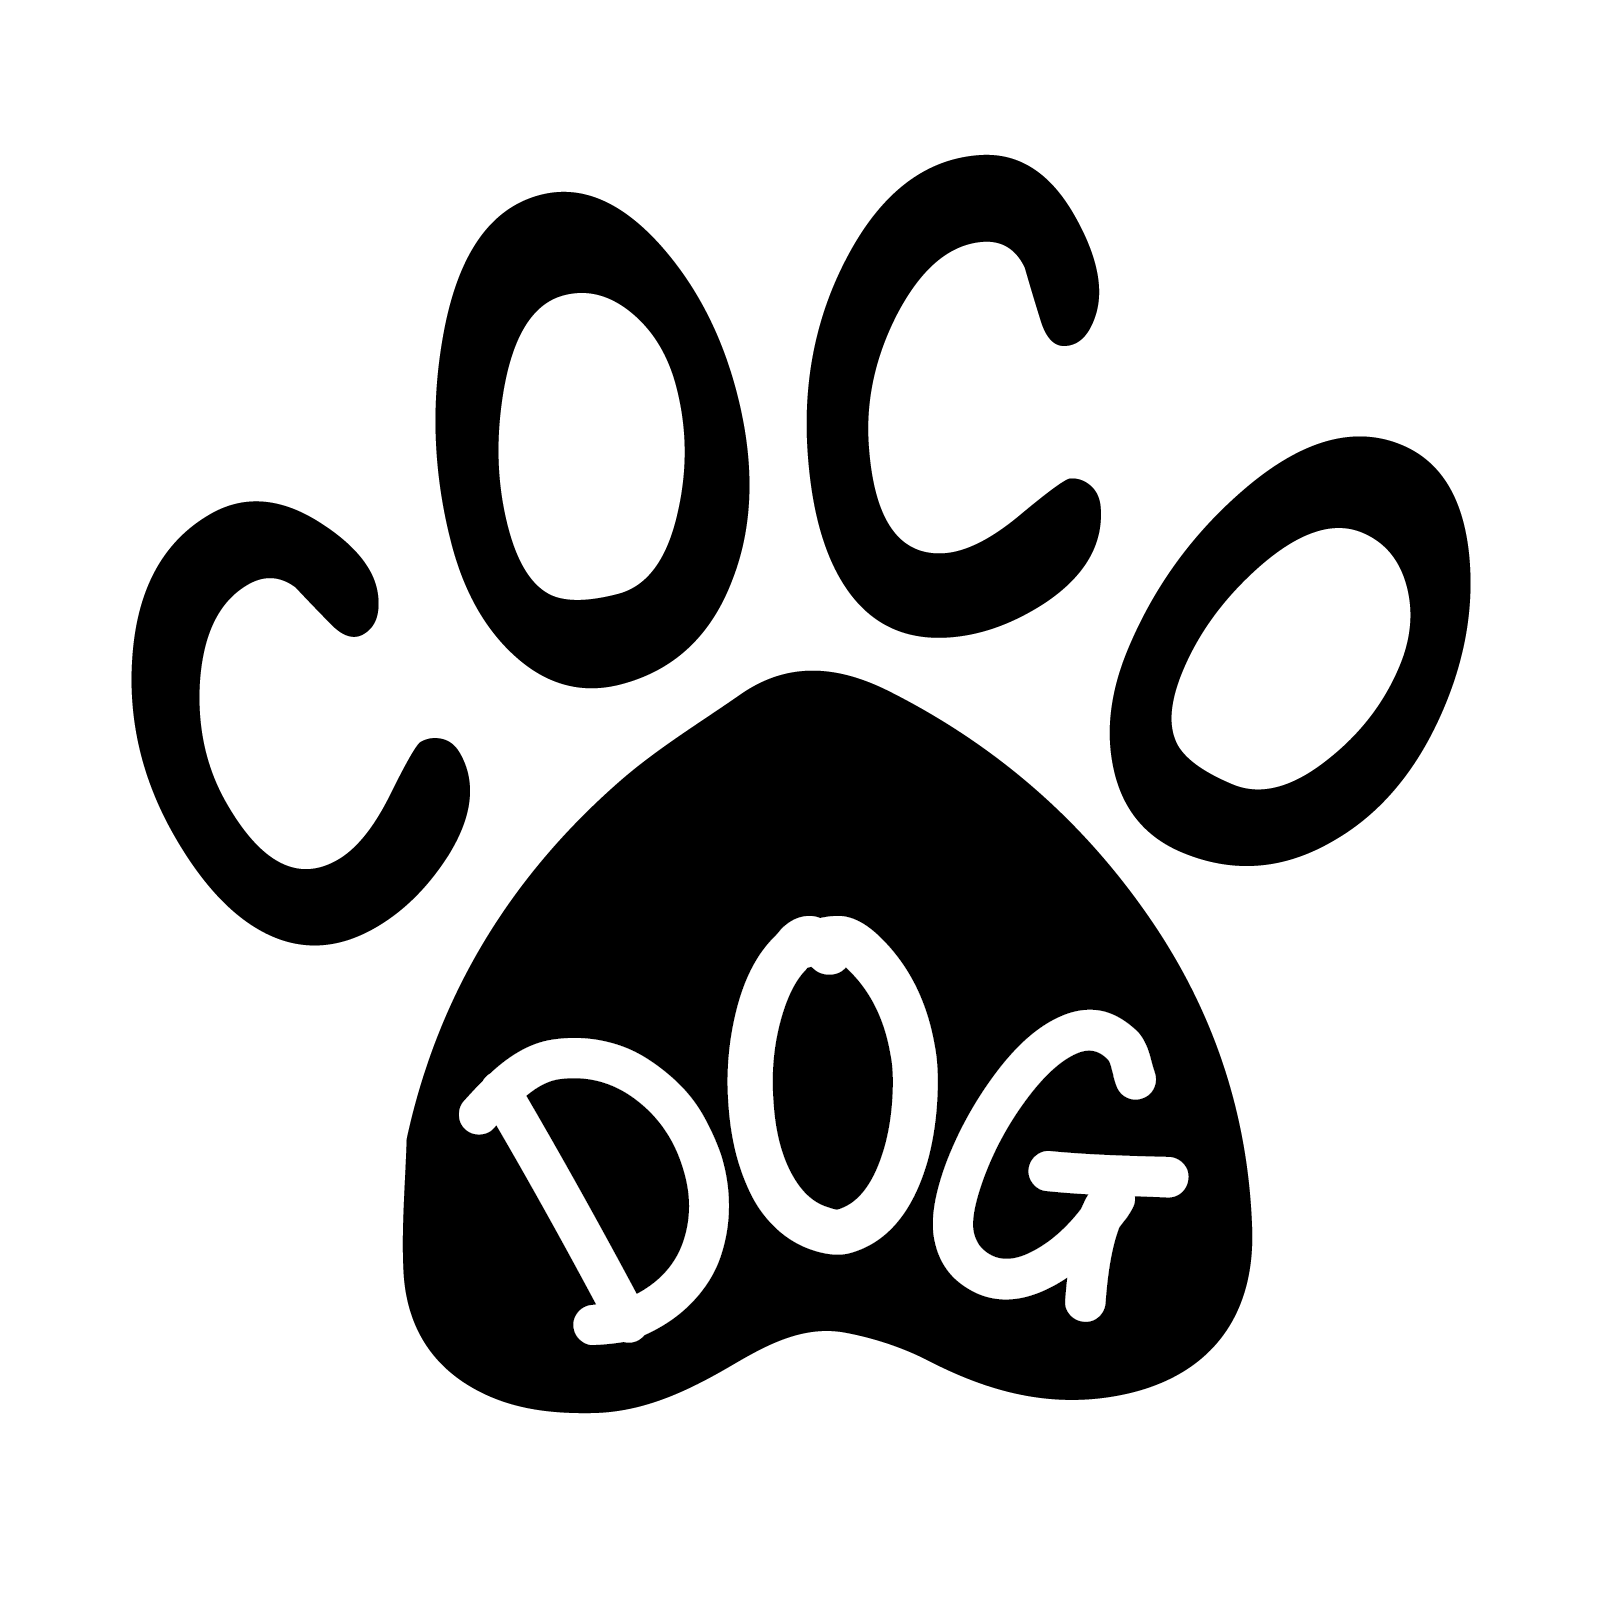 Coco dog